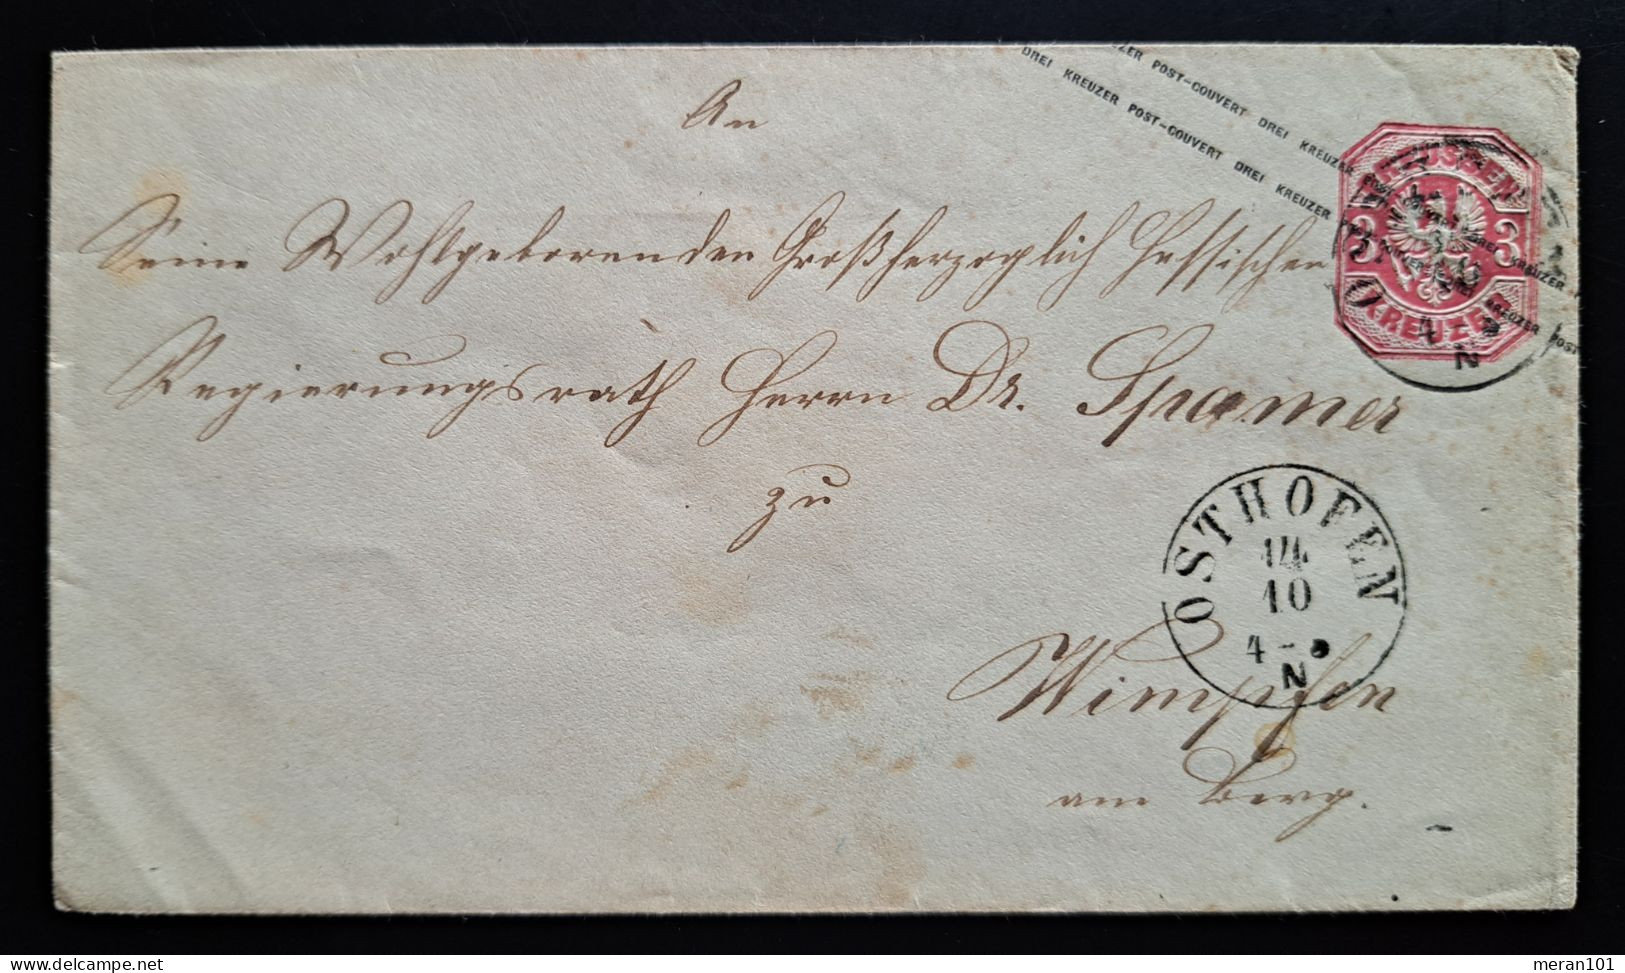 Preussen, Umschlag U36 OSTHOFEN - Lettres & Documents